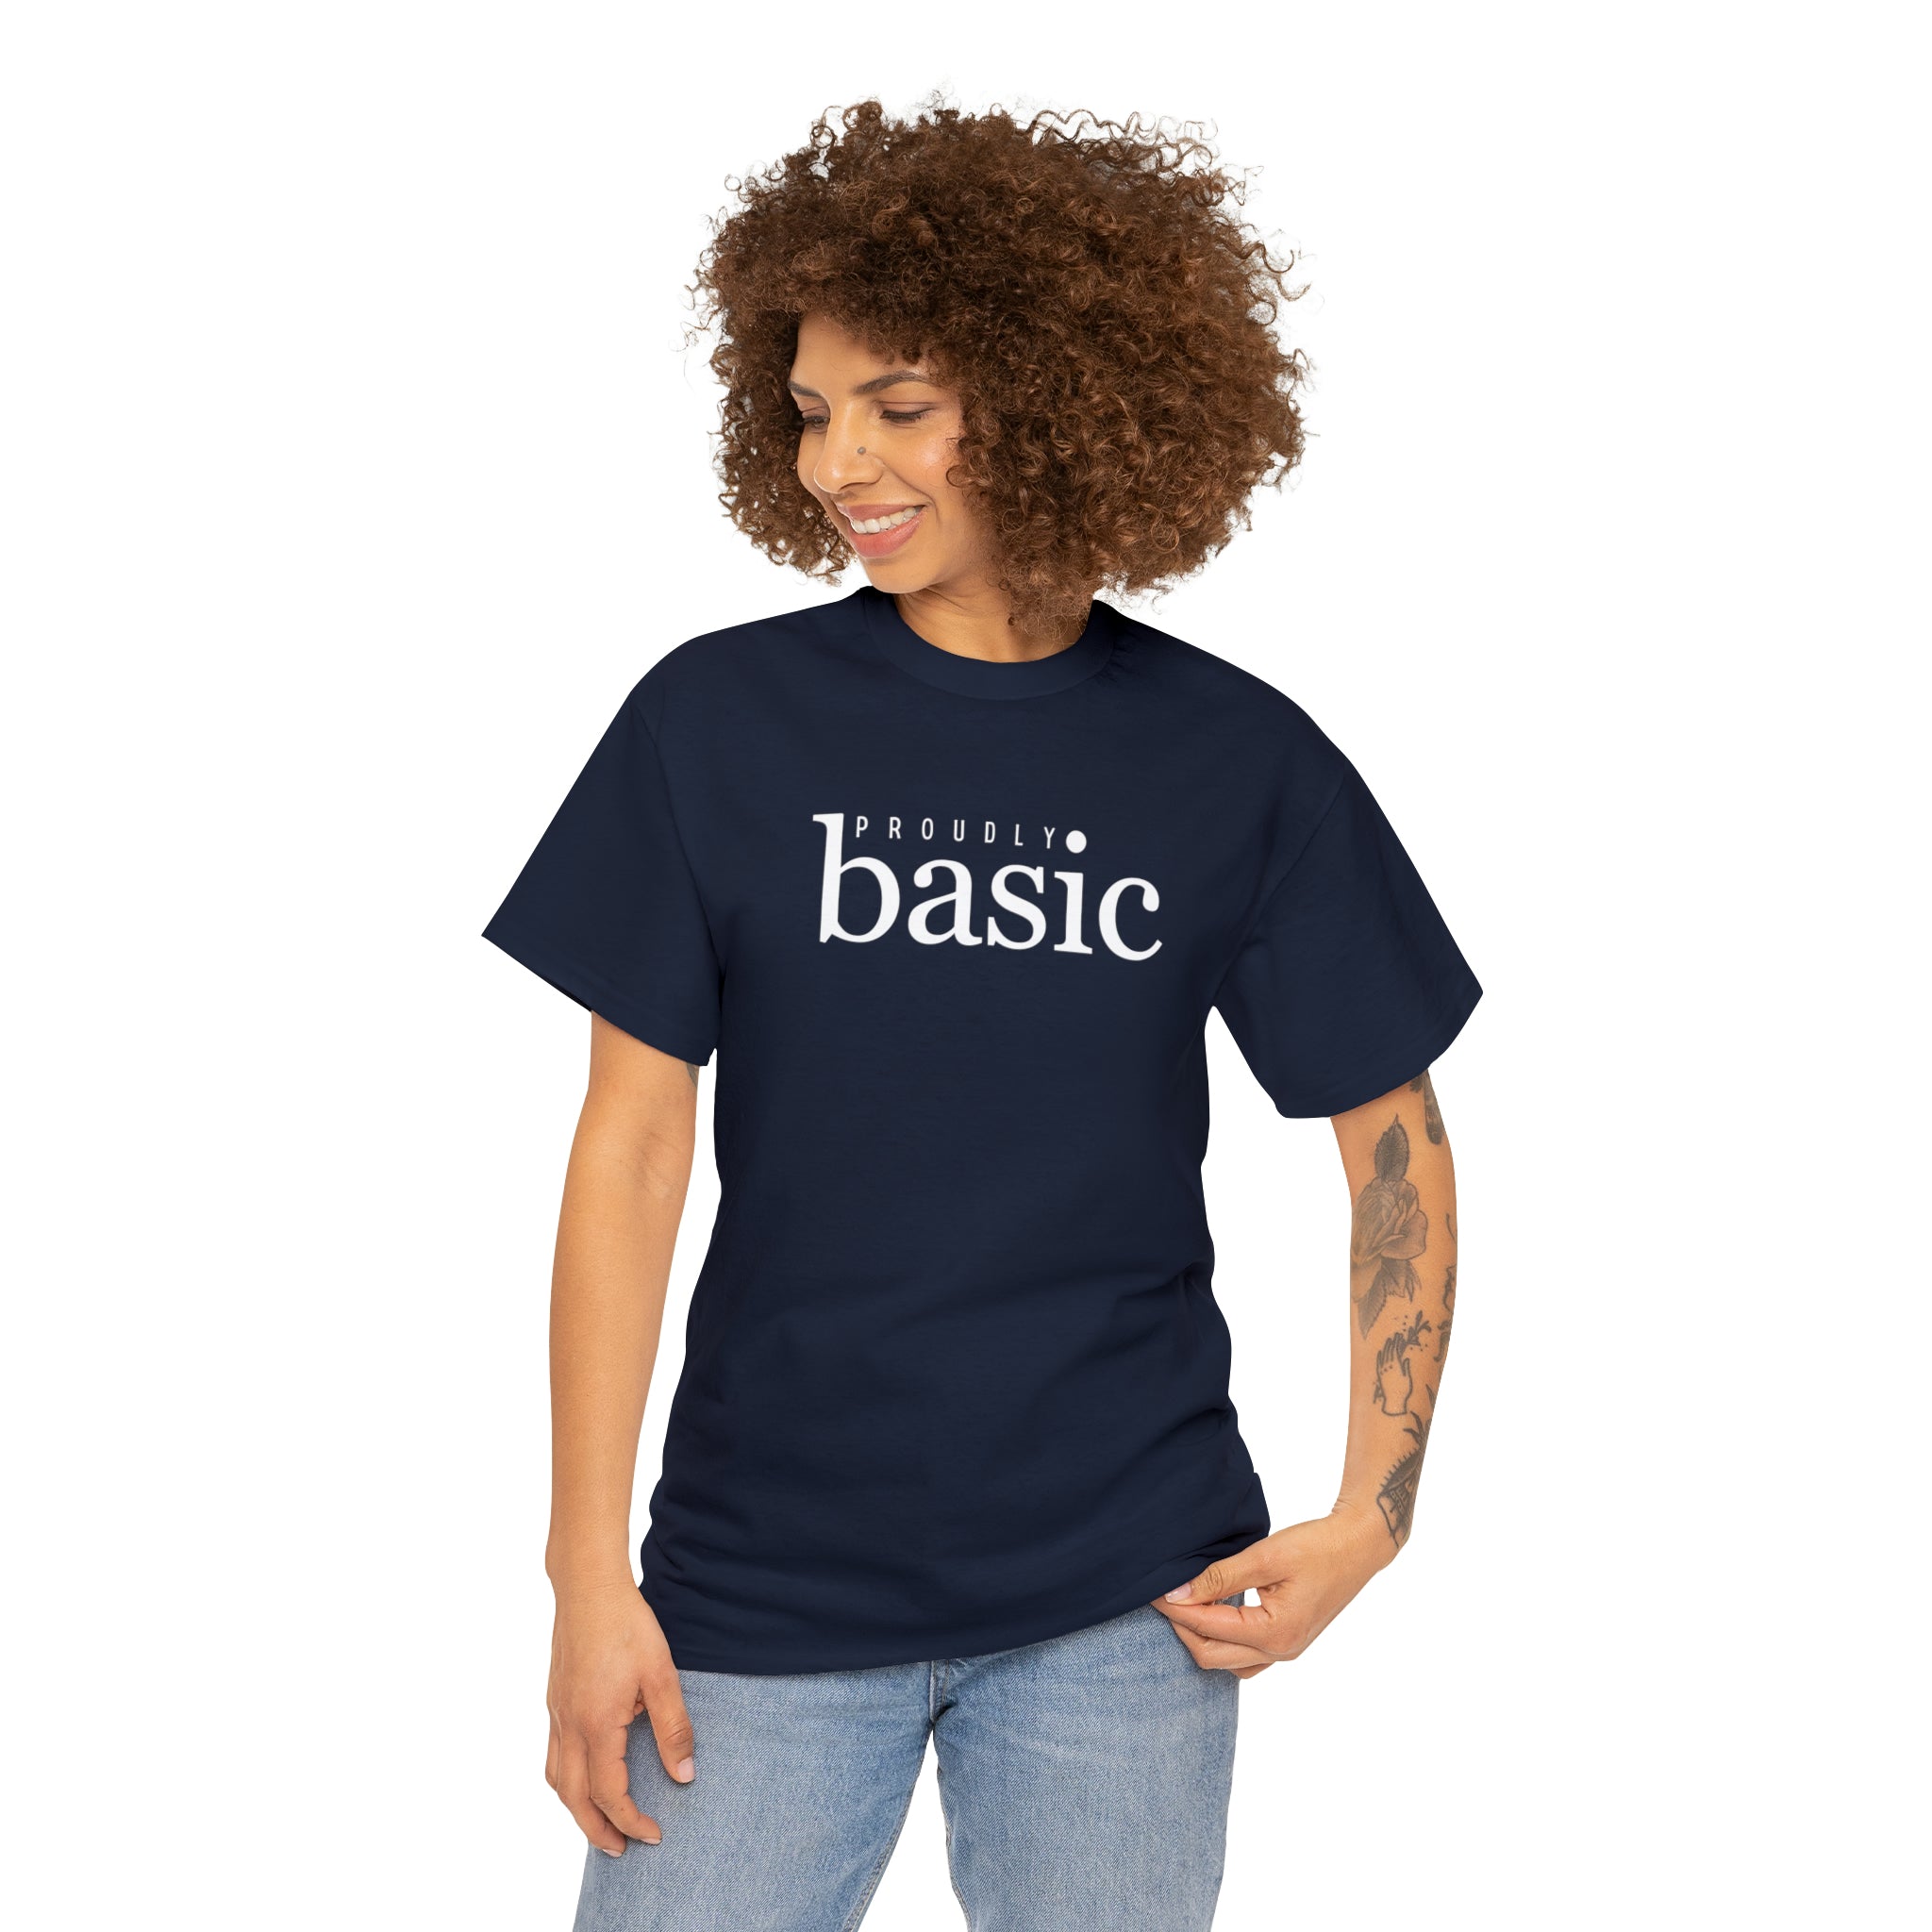  Proudly BASIC Relaxed-Fit Cotton T-Shirt, Female Empowerment Shirt, Cute Graphic T-shirt T-ShirtNavy5XL